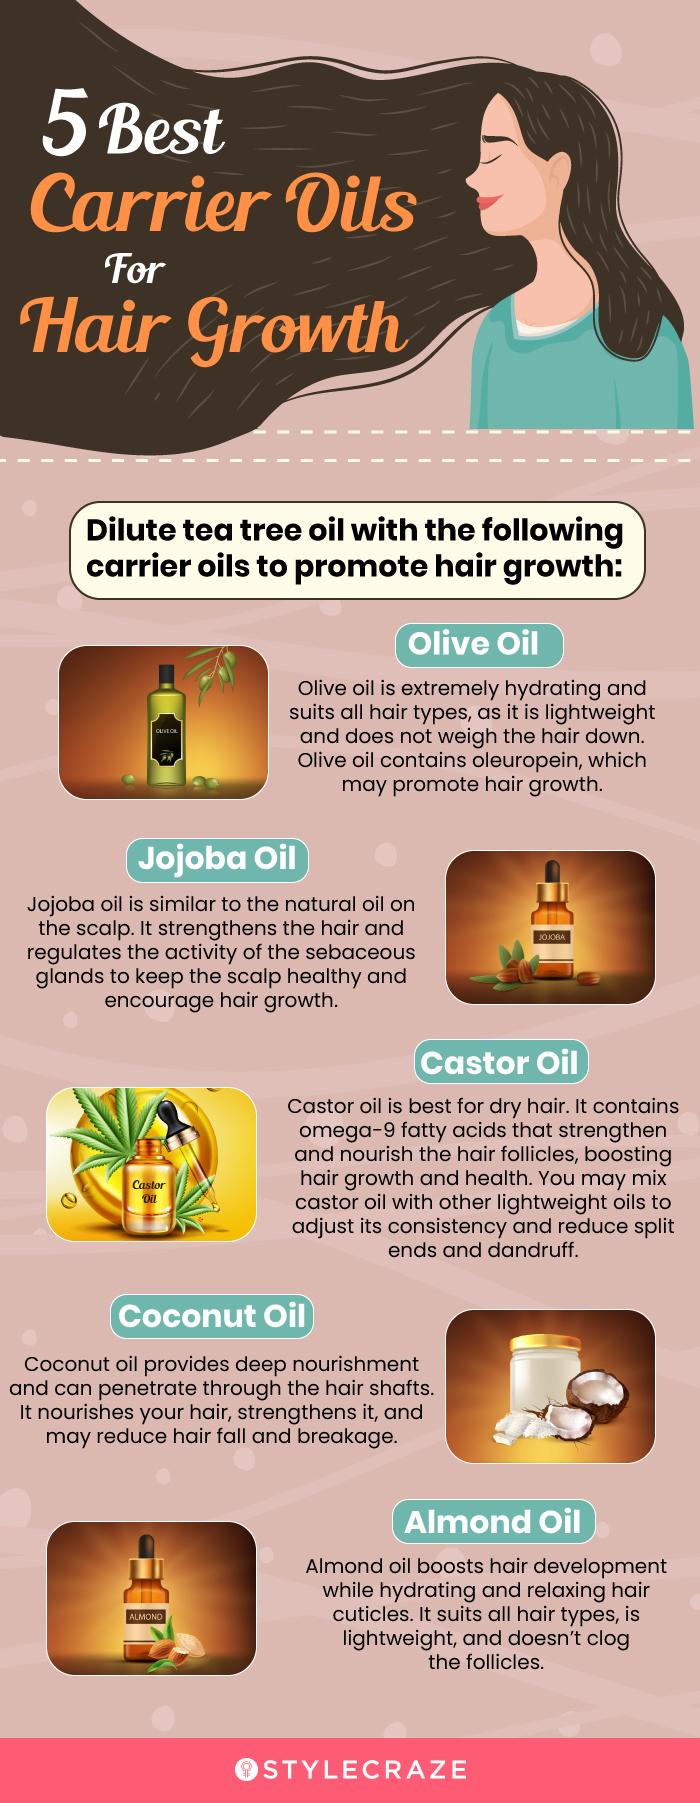 Mamaearth Tea Tree Oil Hair Booster for Hair Growth